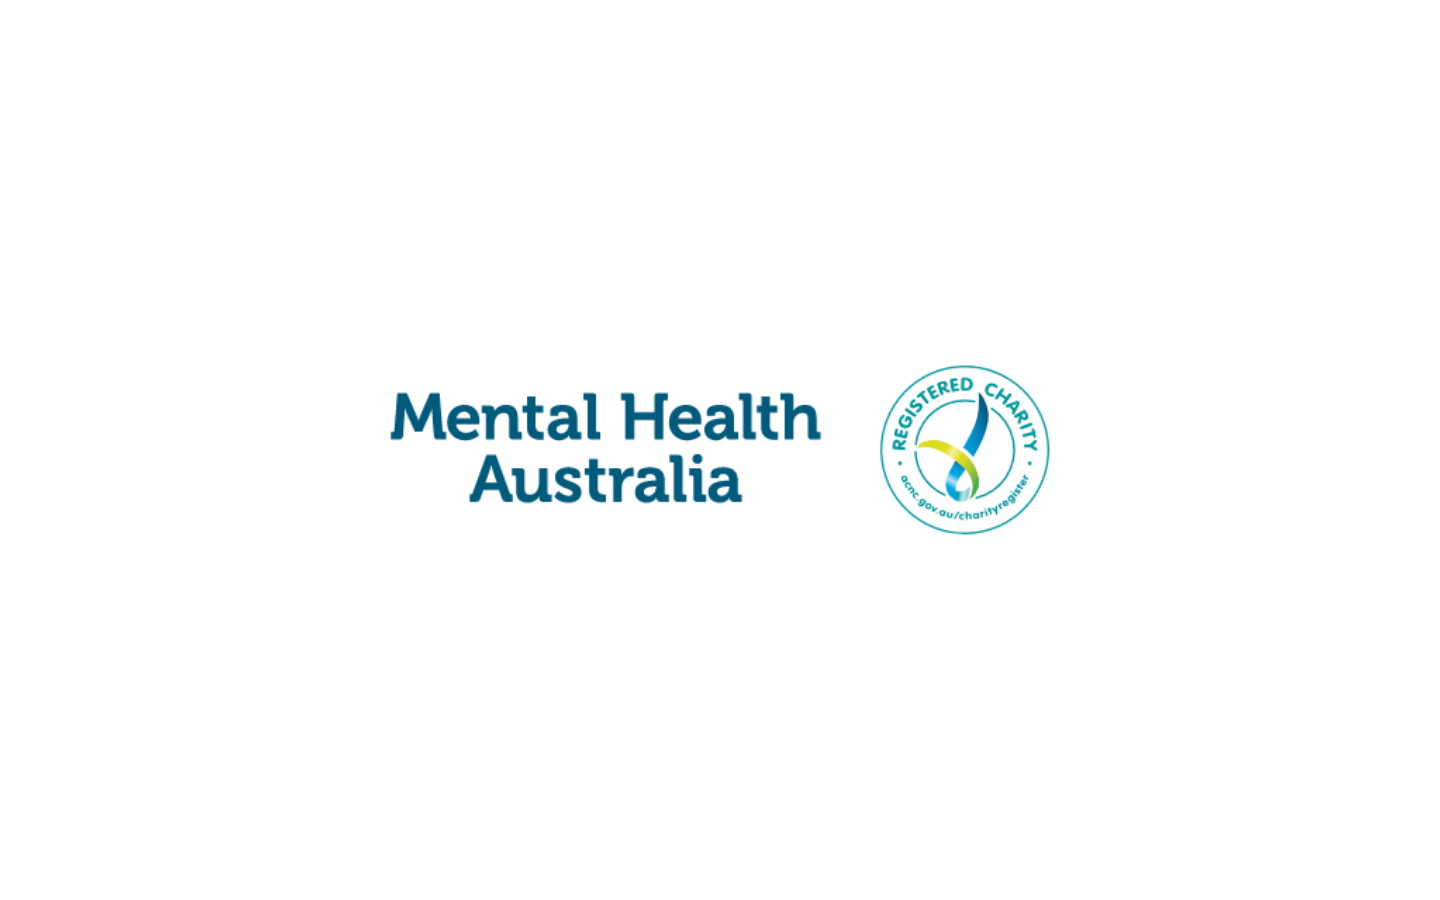 mental health australia logo